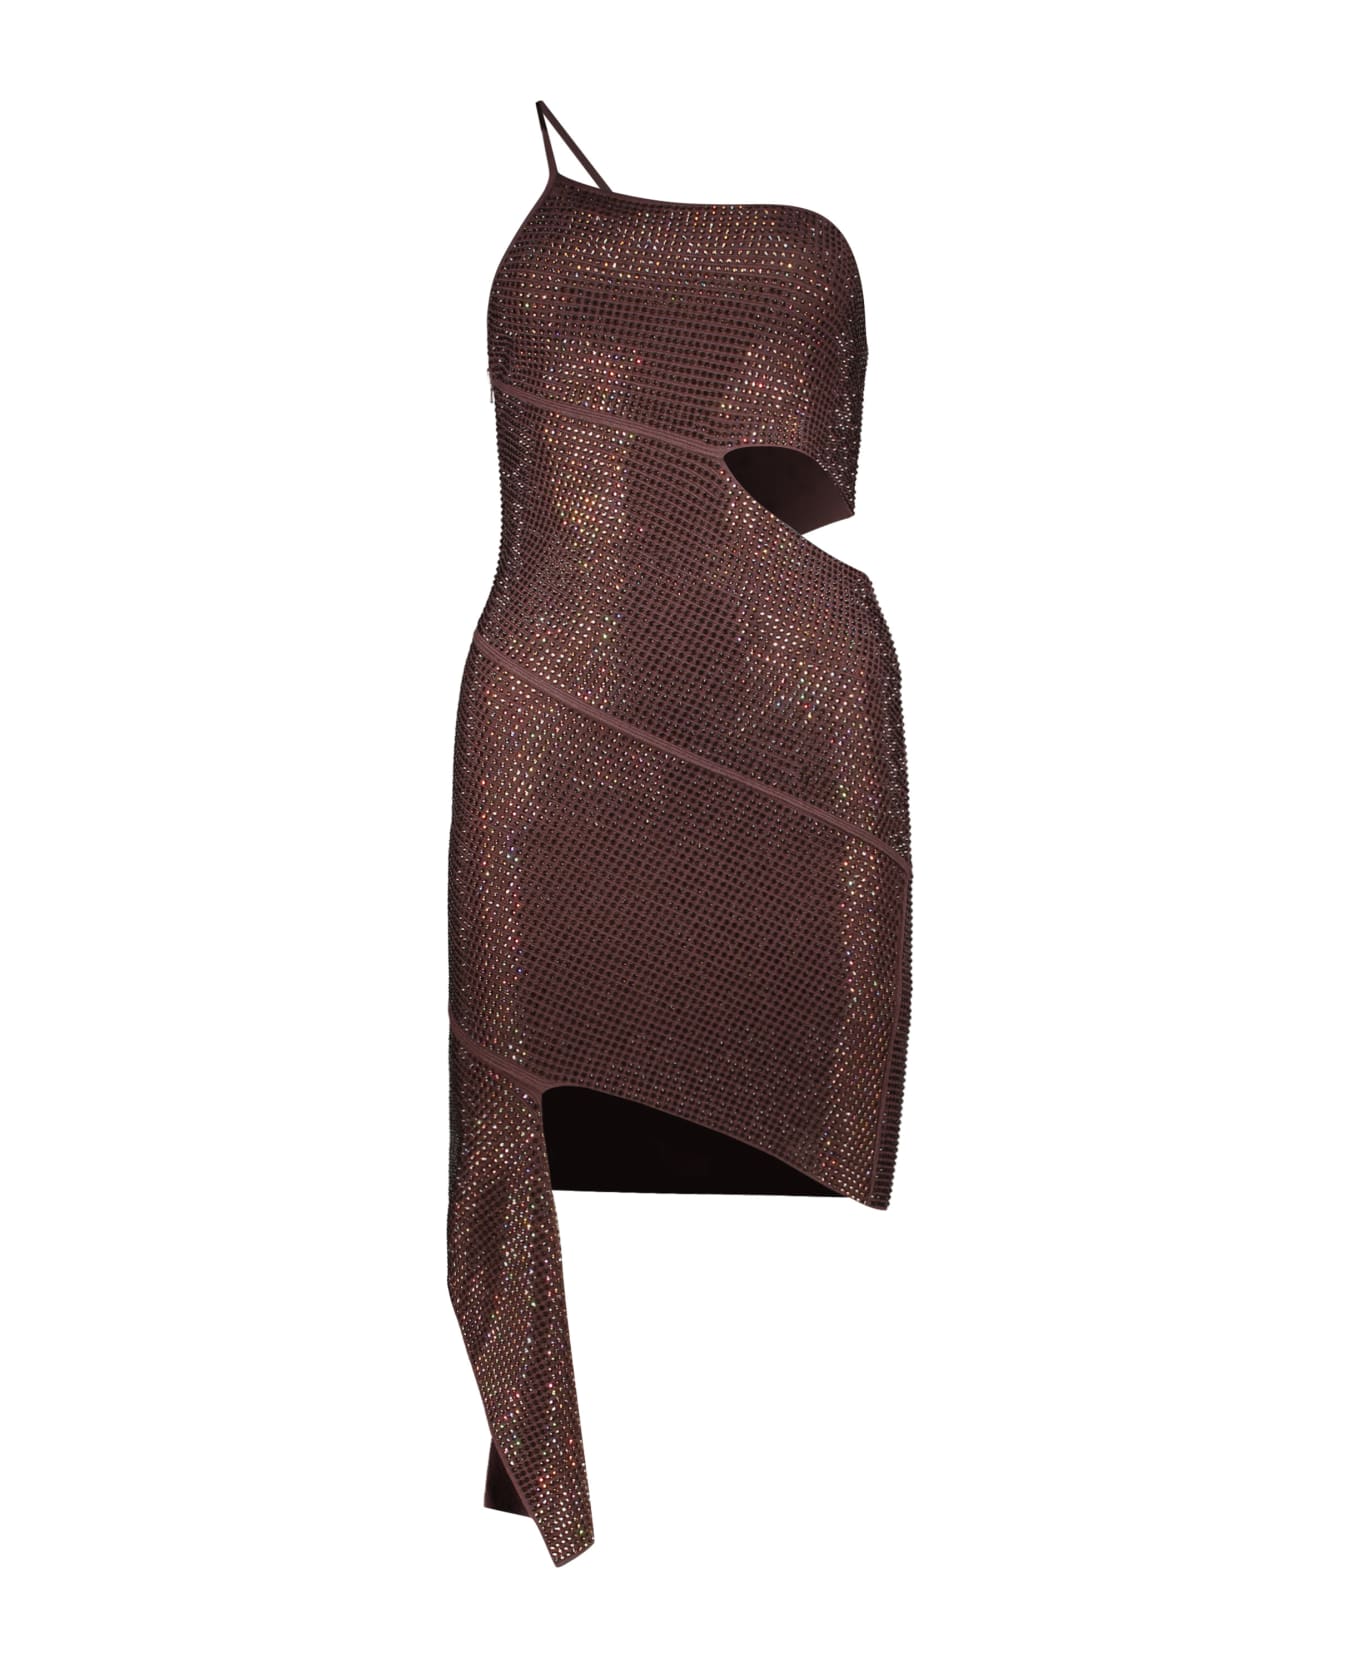 ANDREĀDAMO Embellished Mini Dress - brown